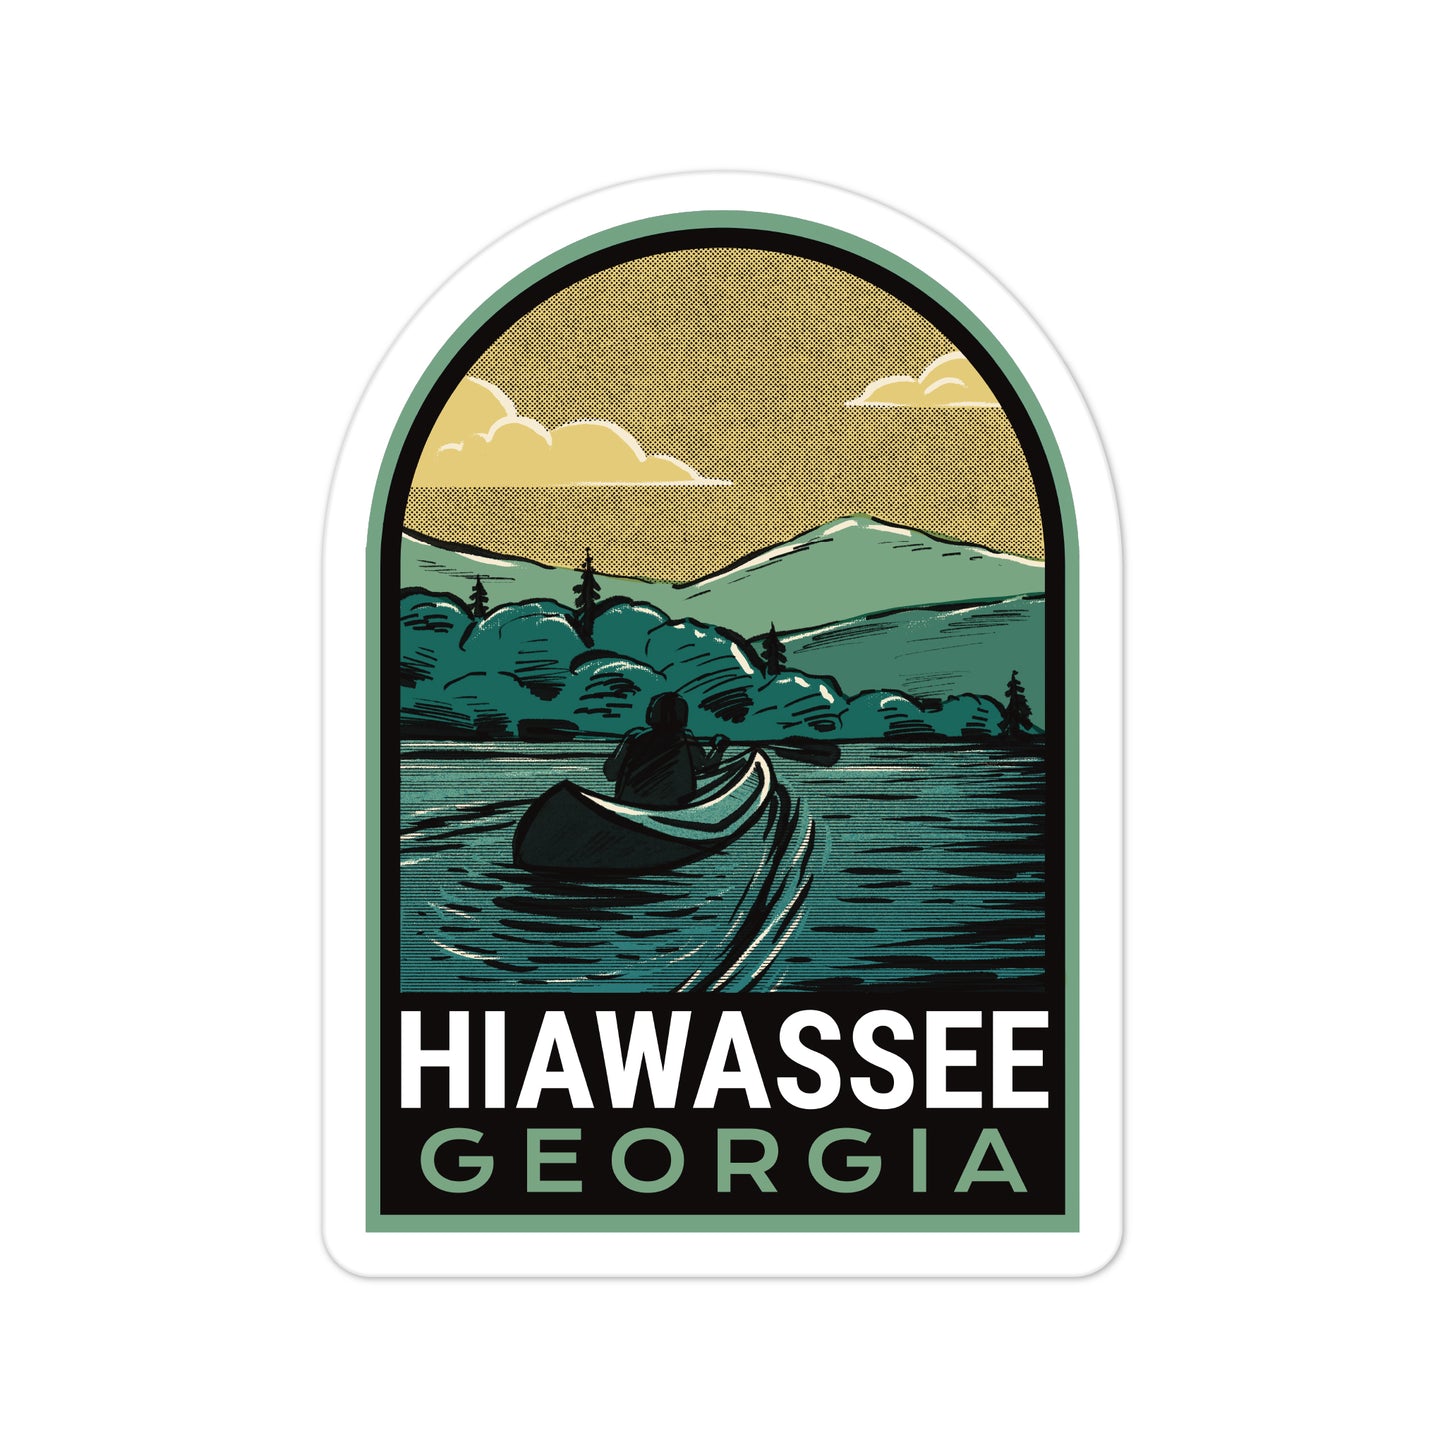 A sticker of Hiawassee Georgia